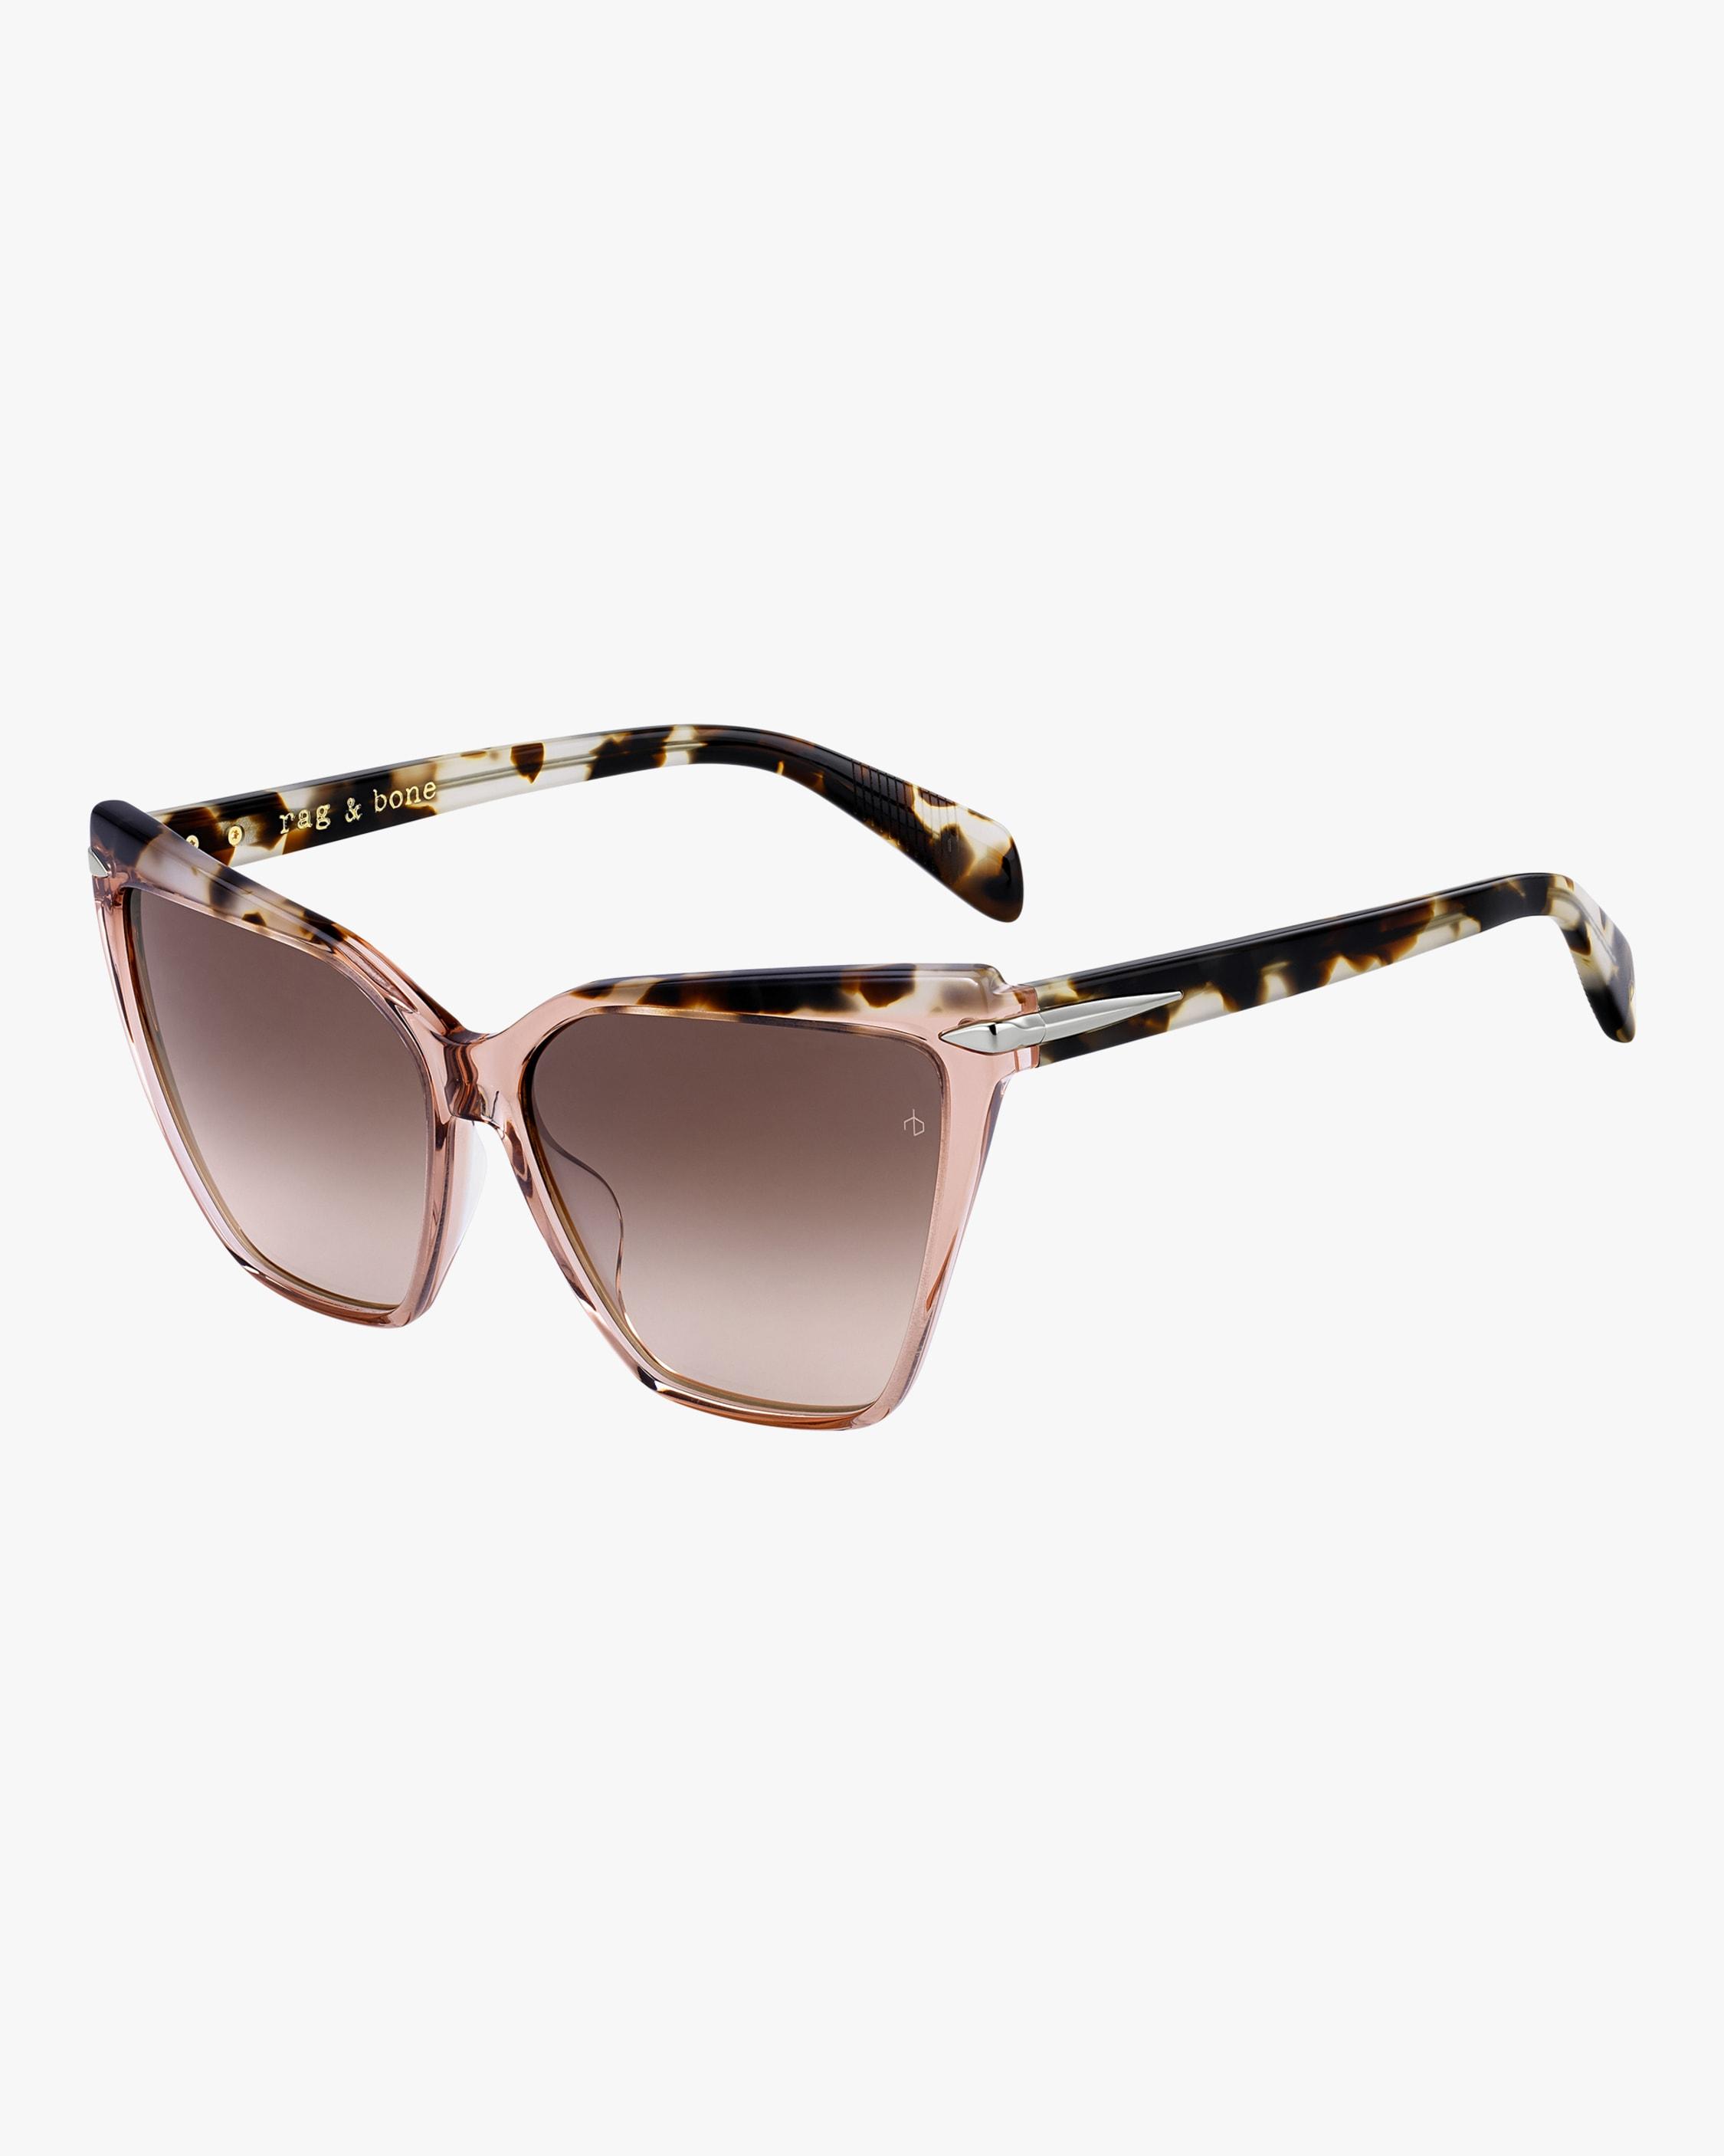 Rag & Bone Squared Cat Eye Sunglasses in Brown - Lyst